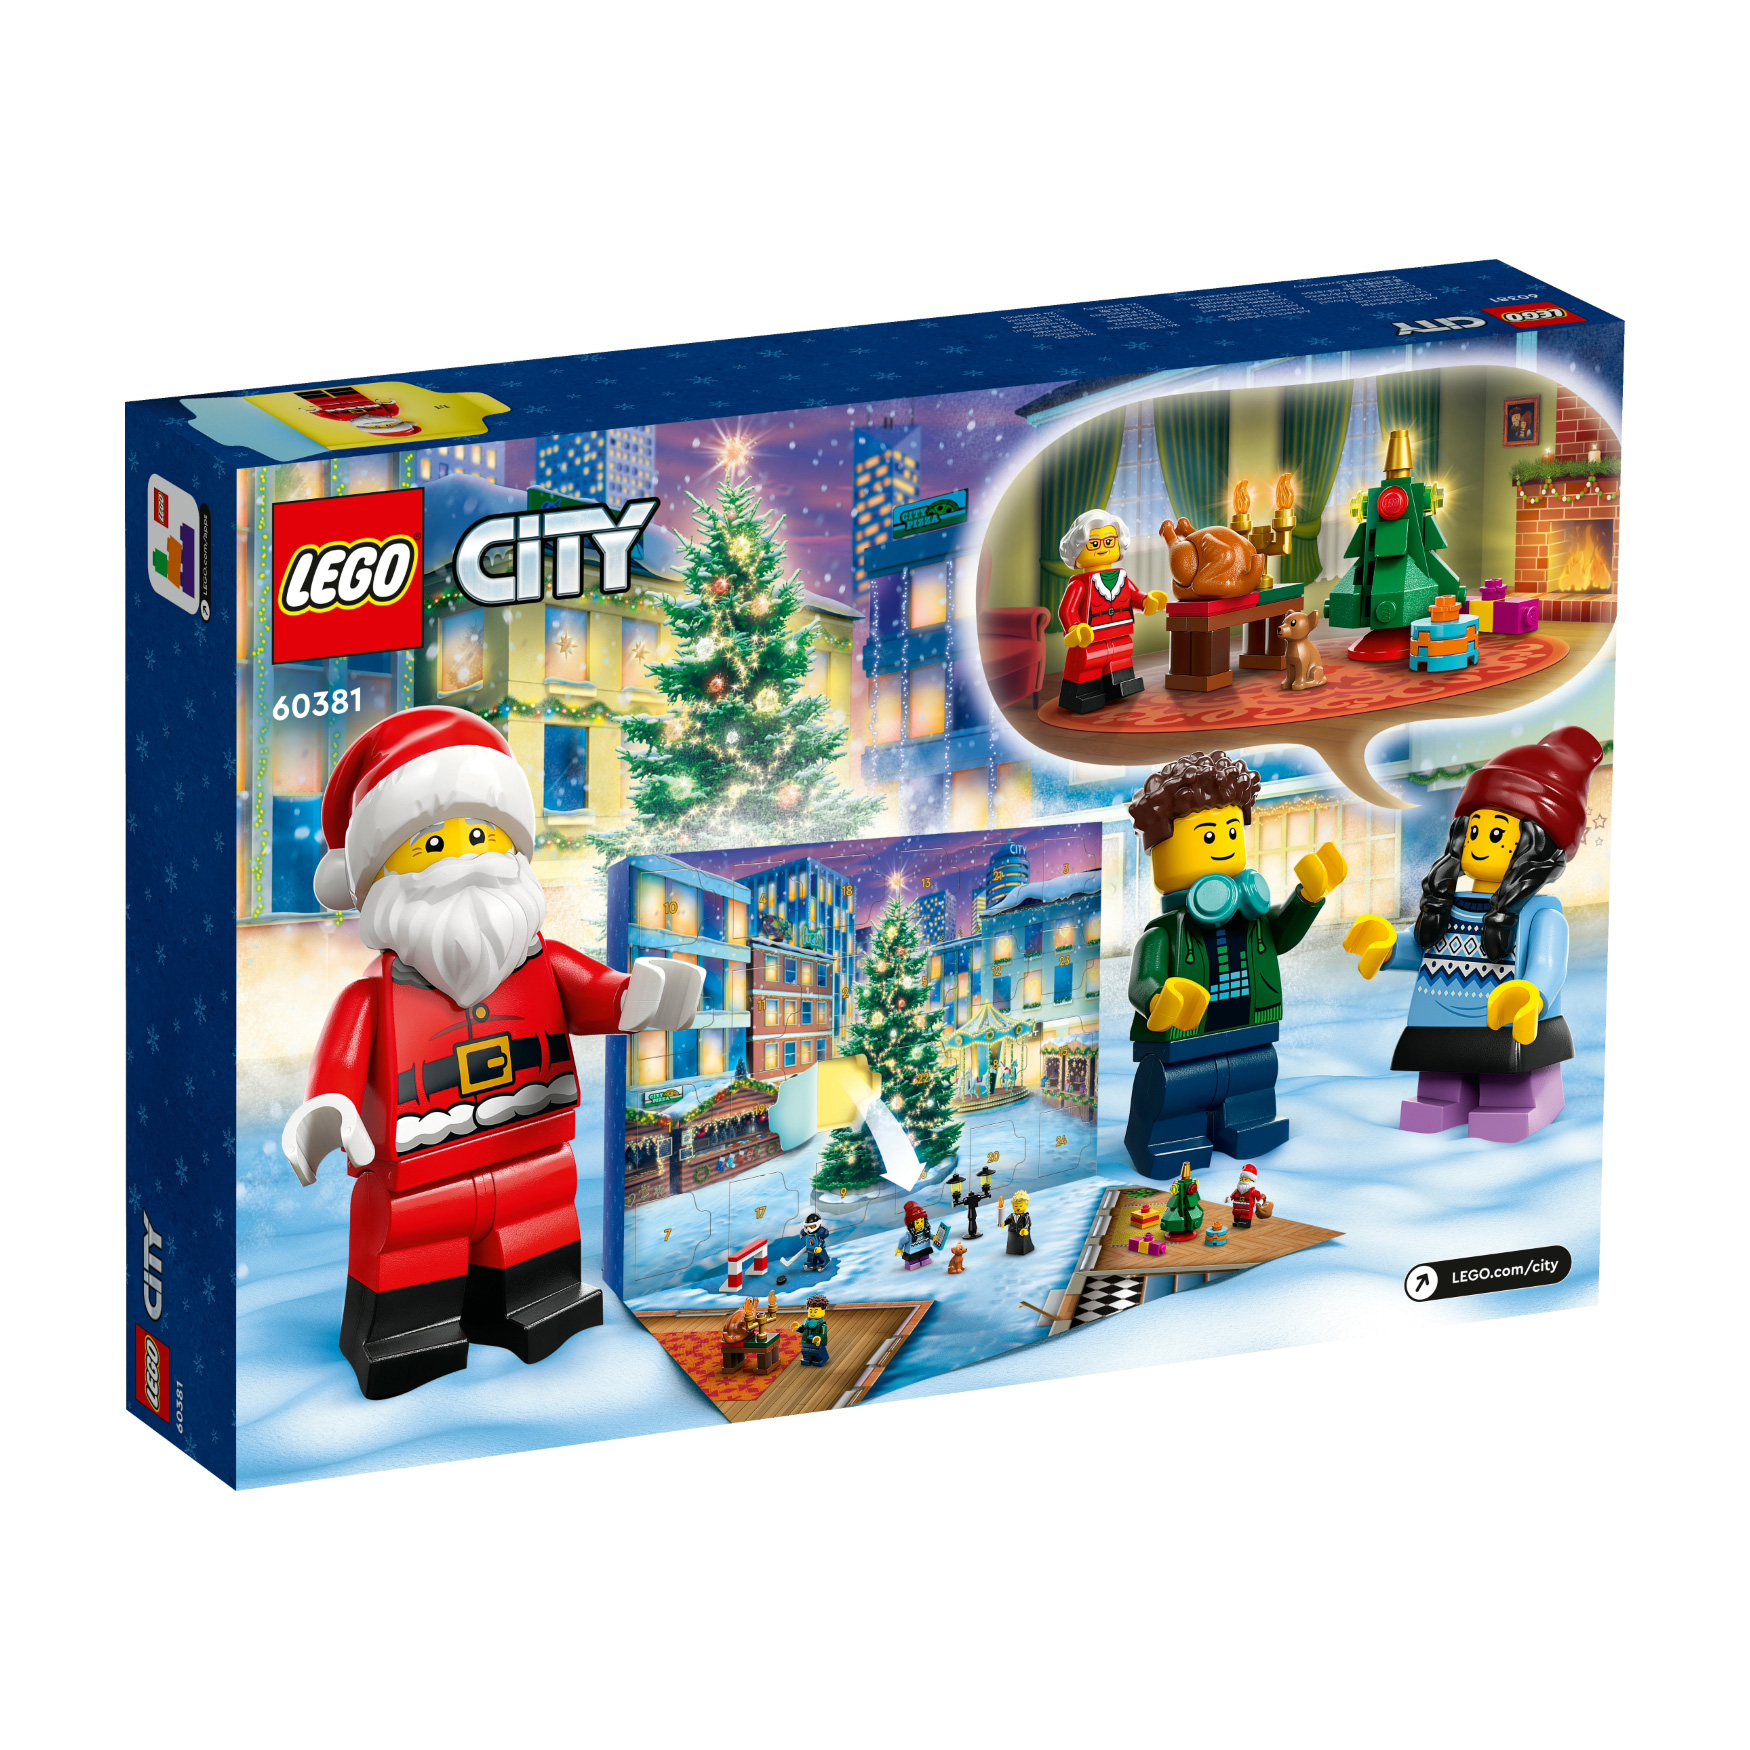 LEGO Harry Potter Advent Calendar 76404 (Retiring Soon) by LEGO